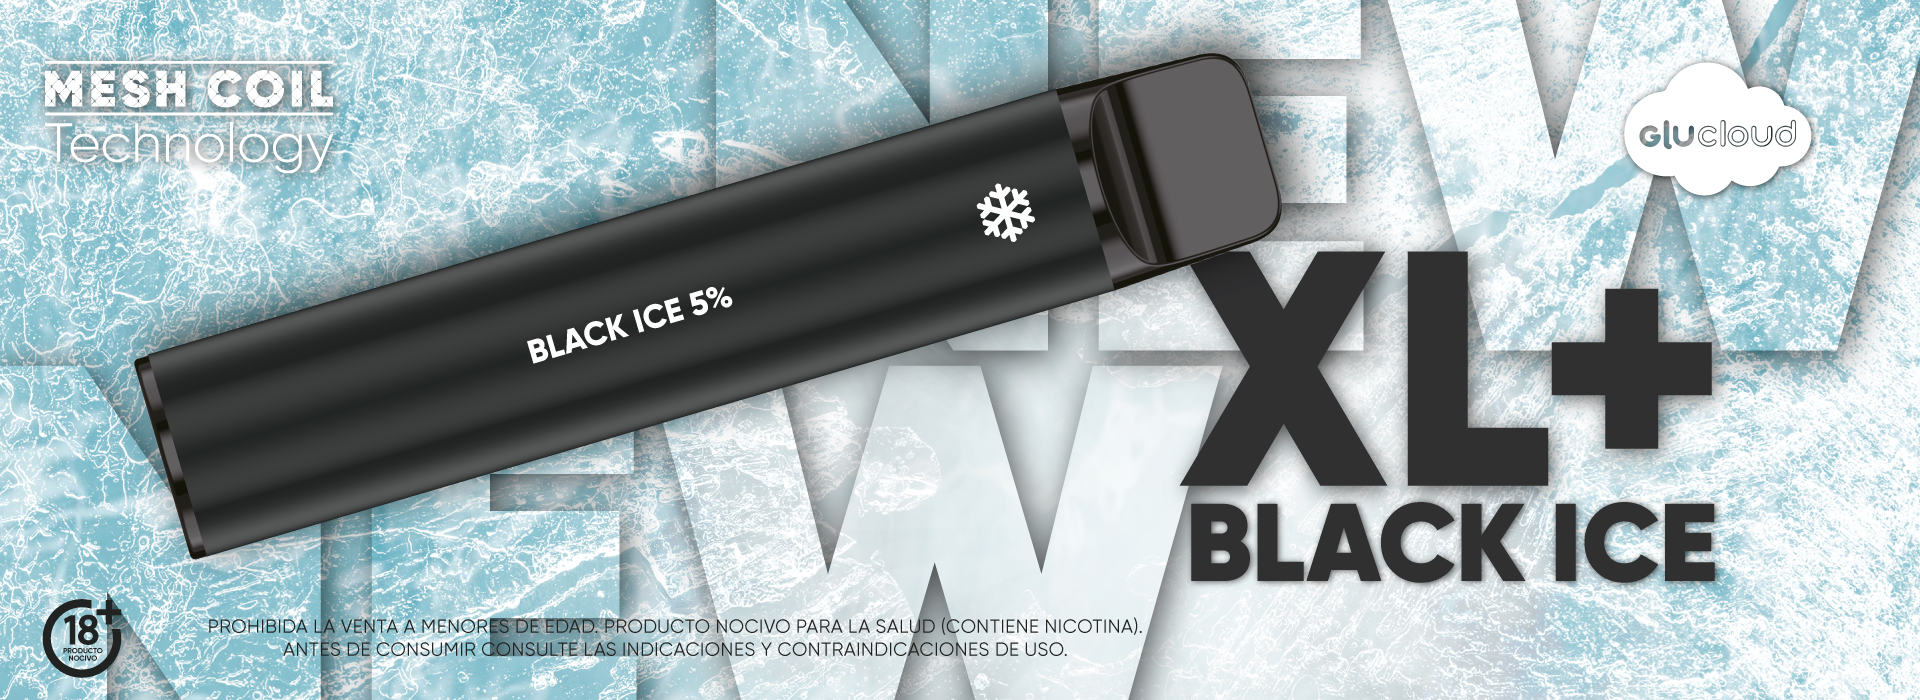 Nuevo black Ice